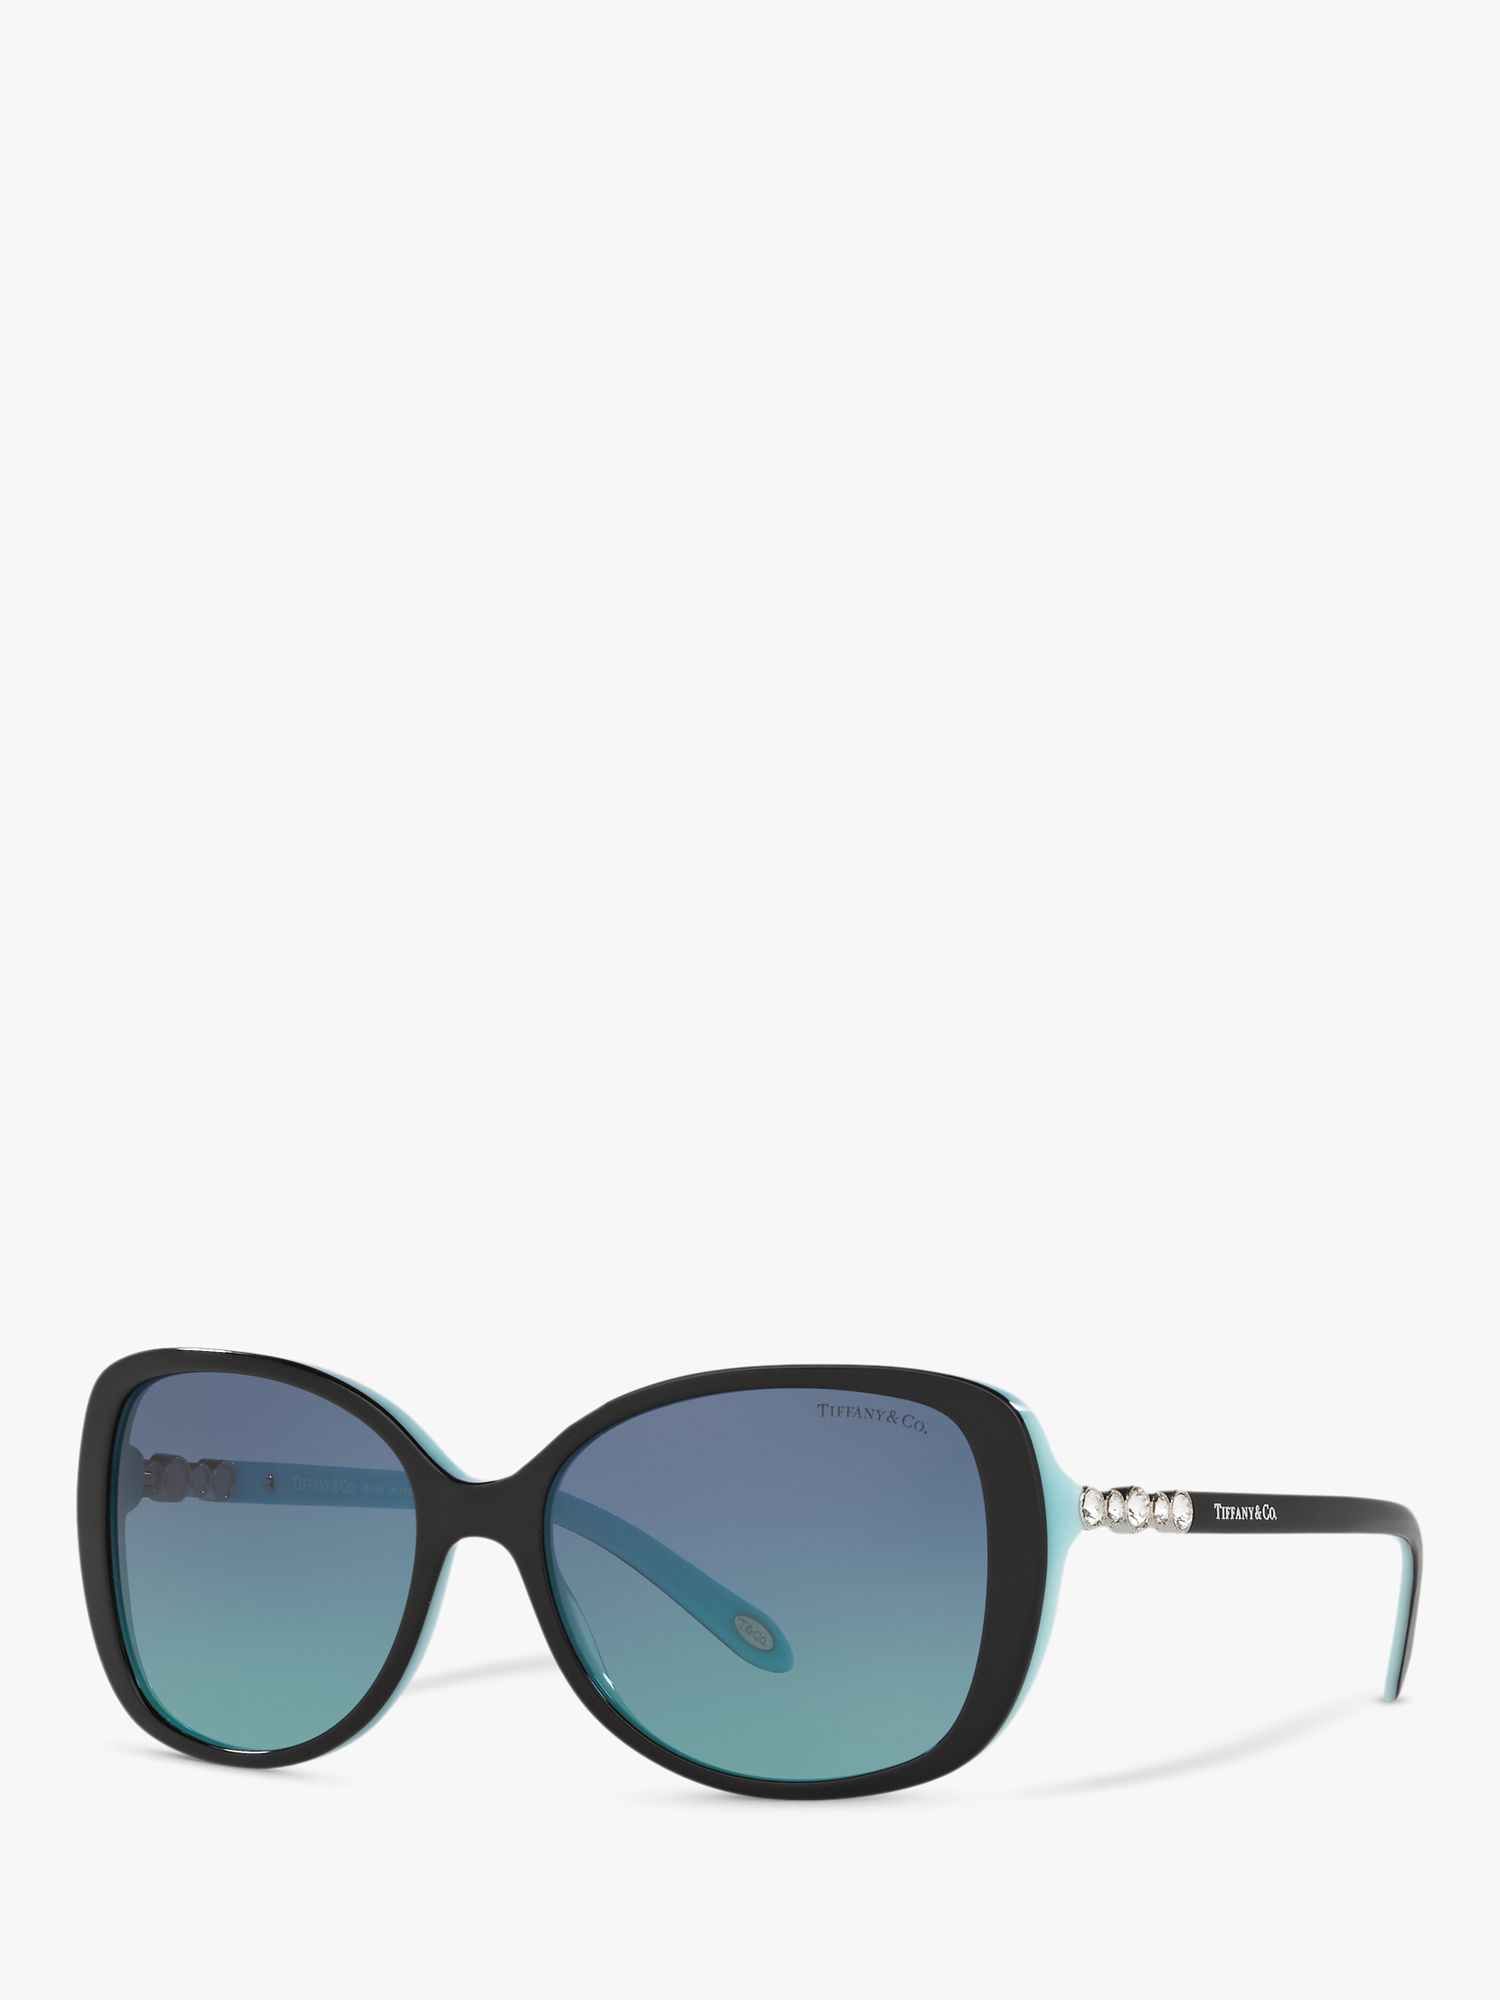 tiffany tf4121b rectangle sunglasses